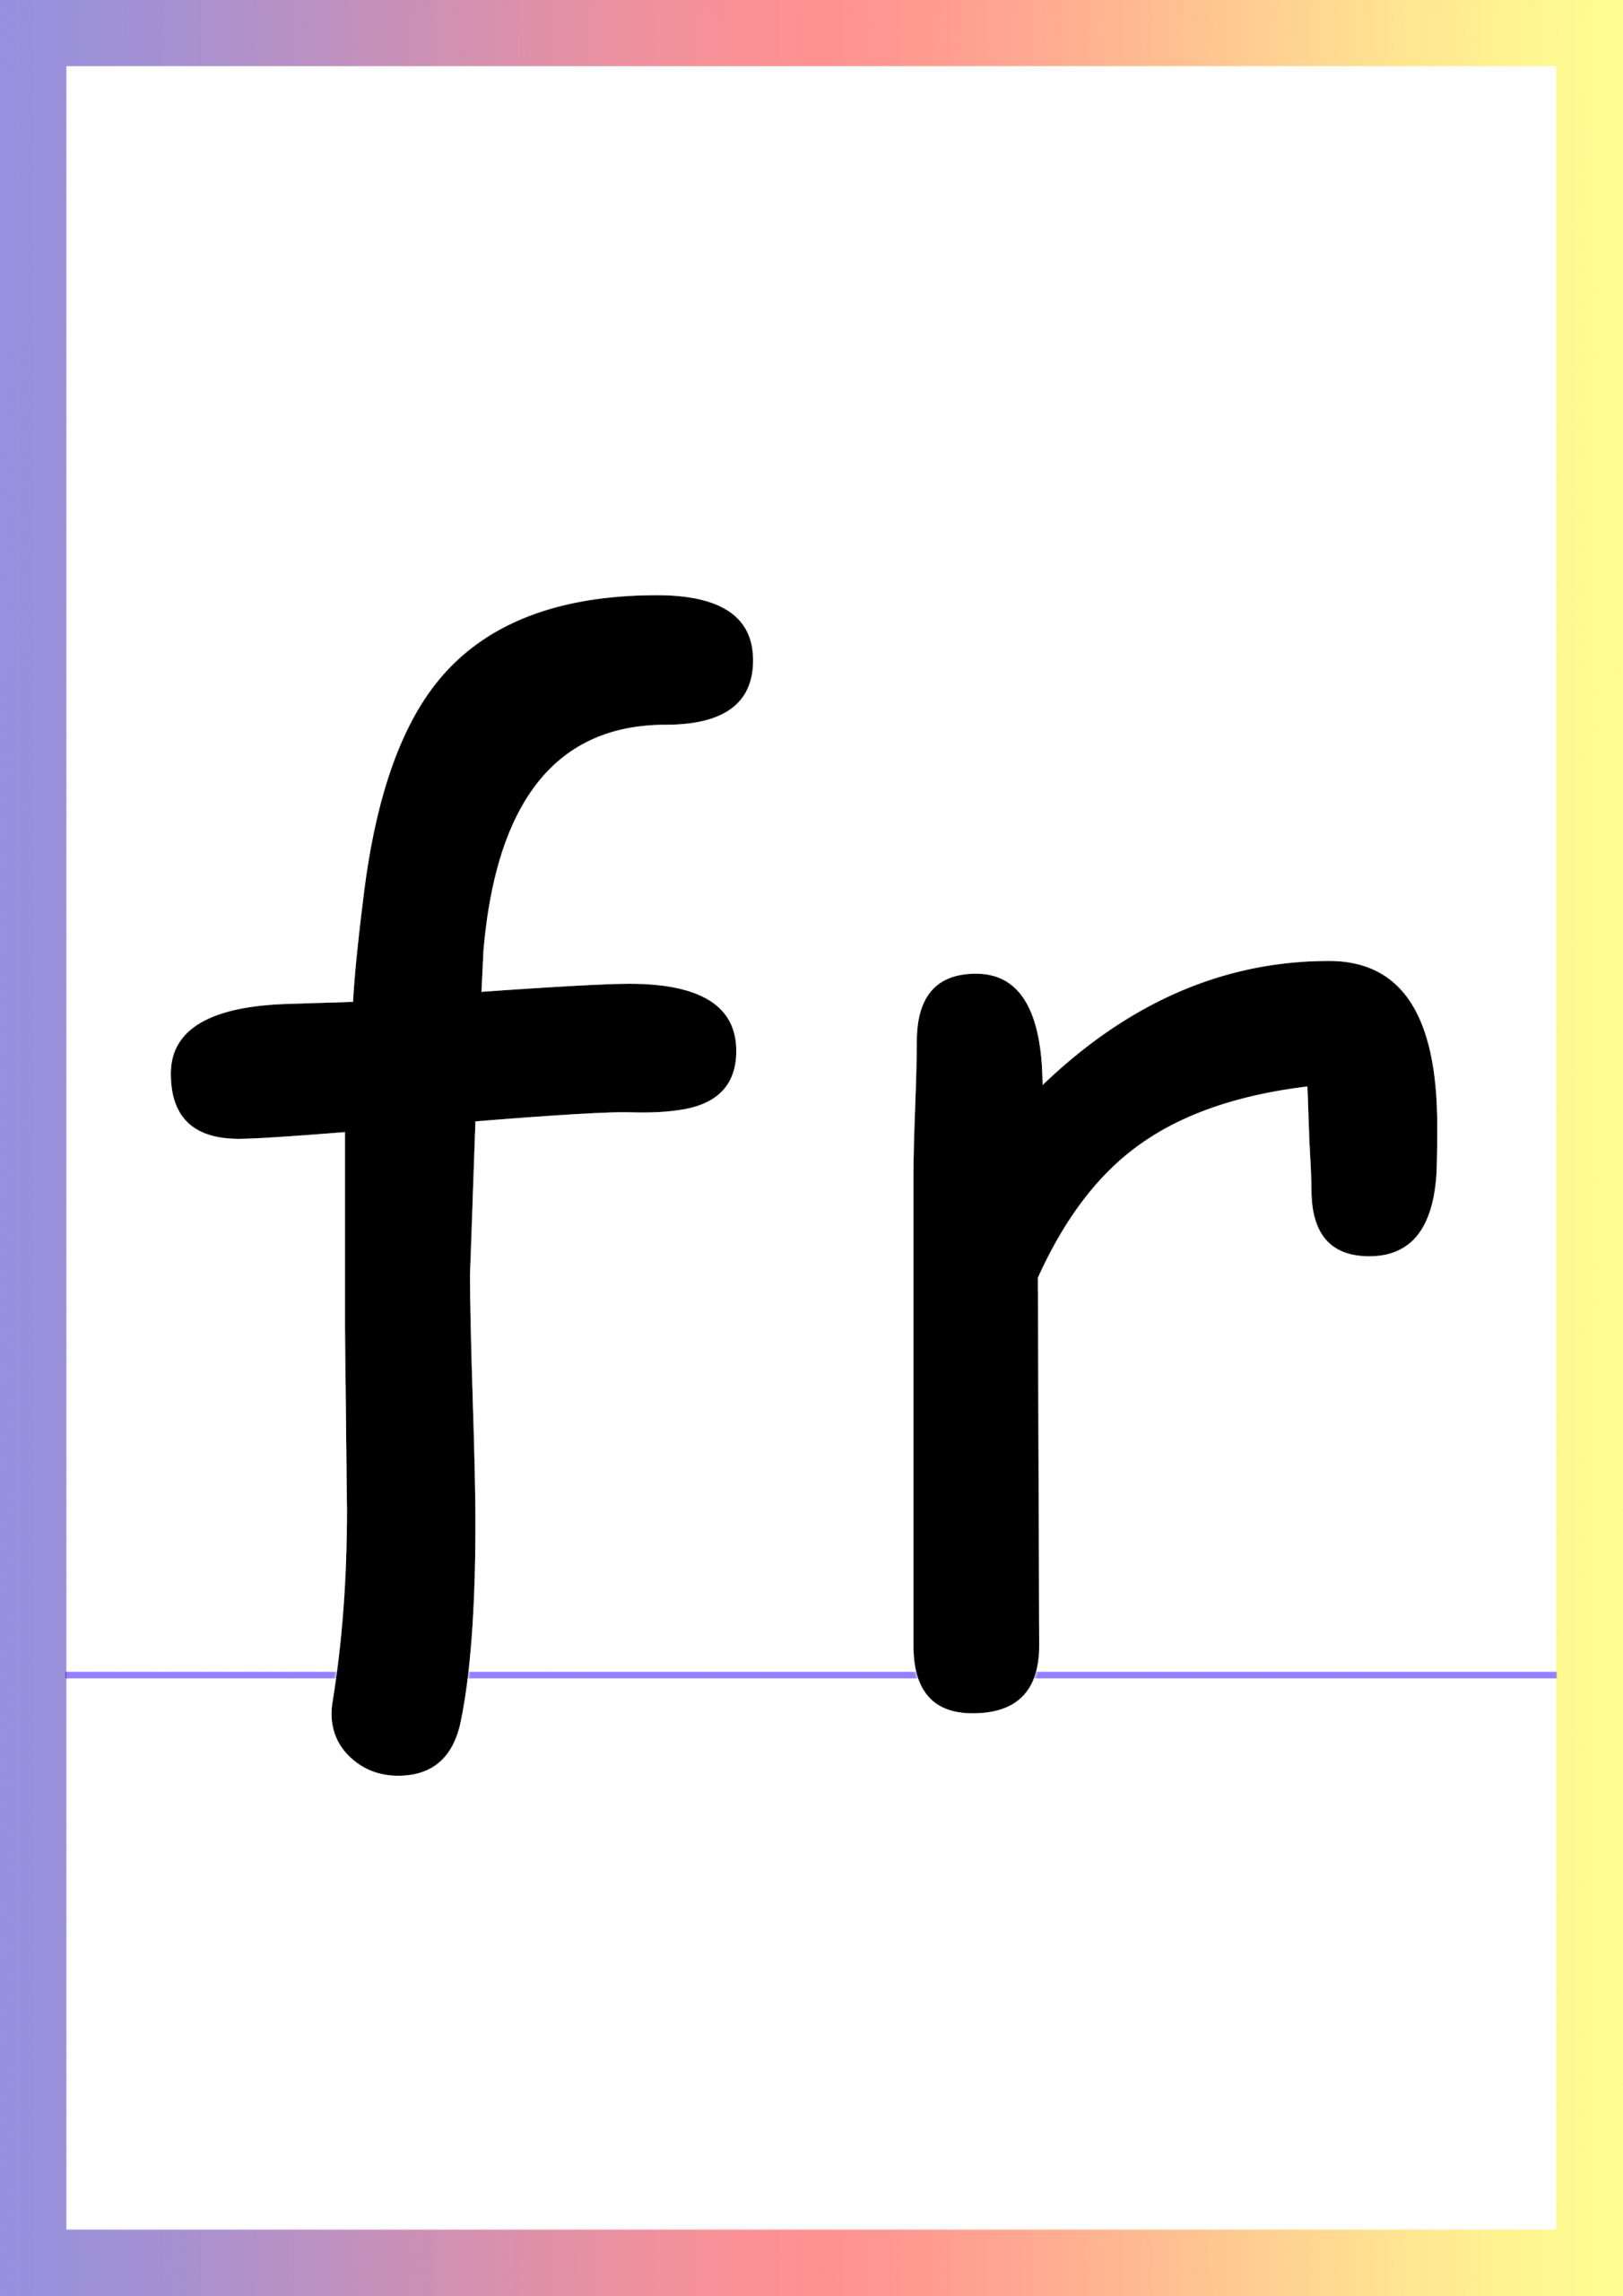 FREE Consonant Blends Flashcards - teach advanced phonics!